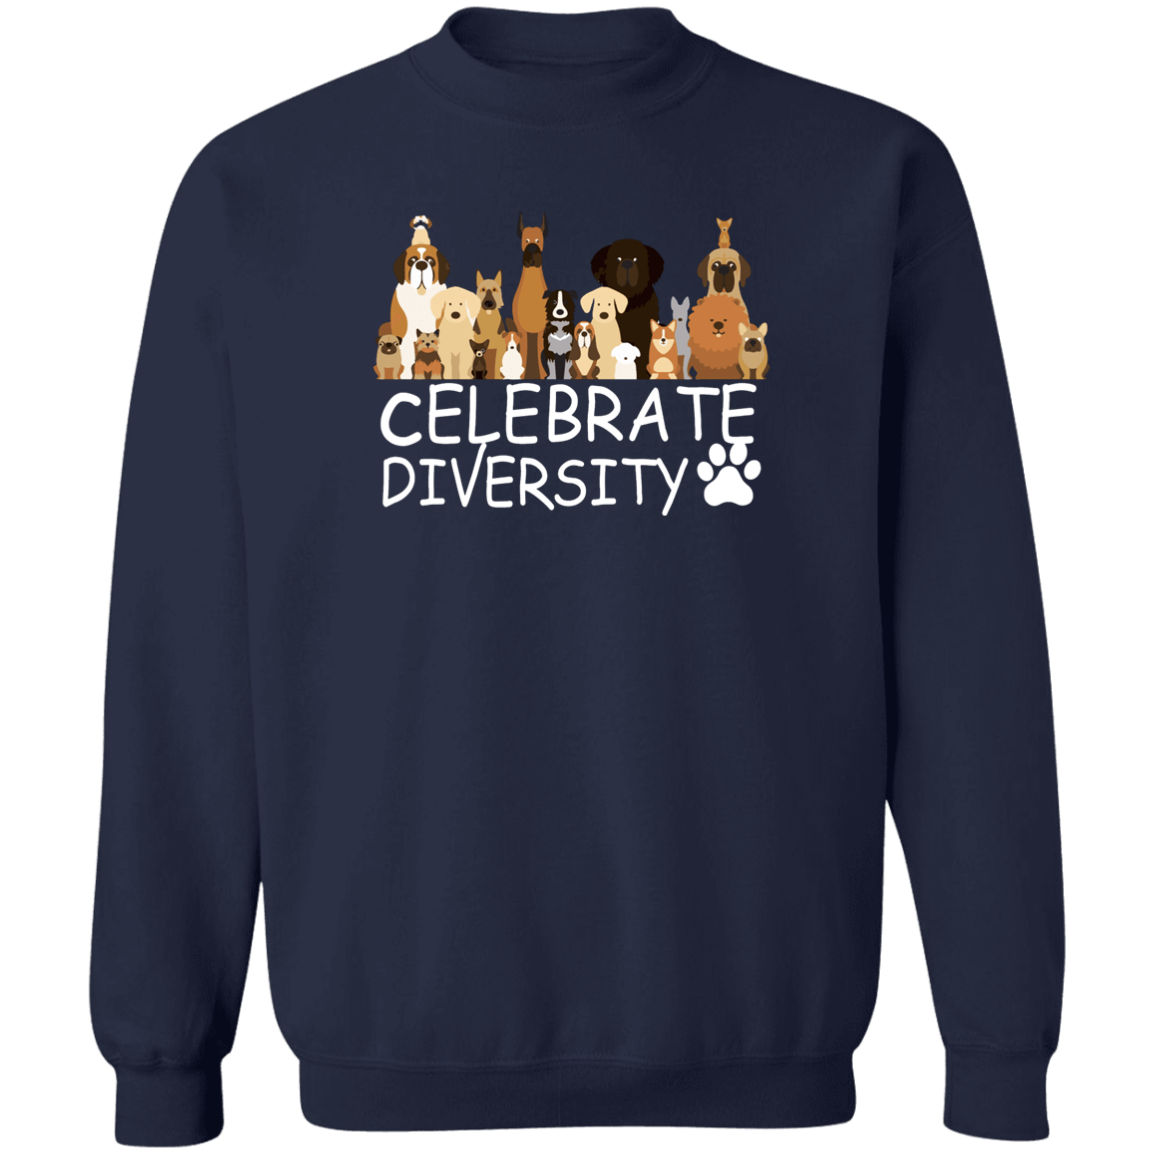 Celebrate Diversity - Sweatshirt.